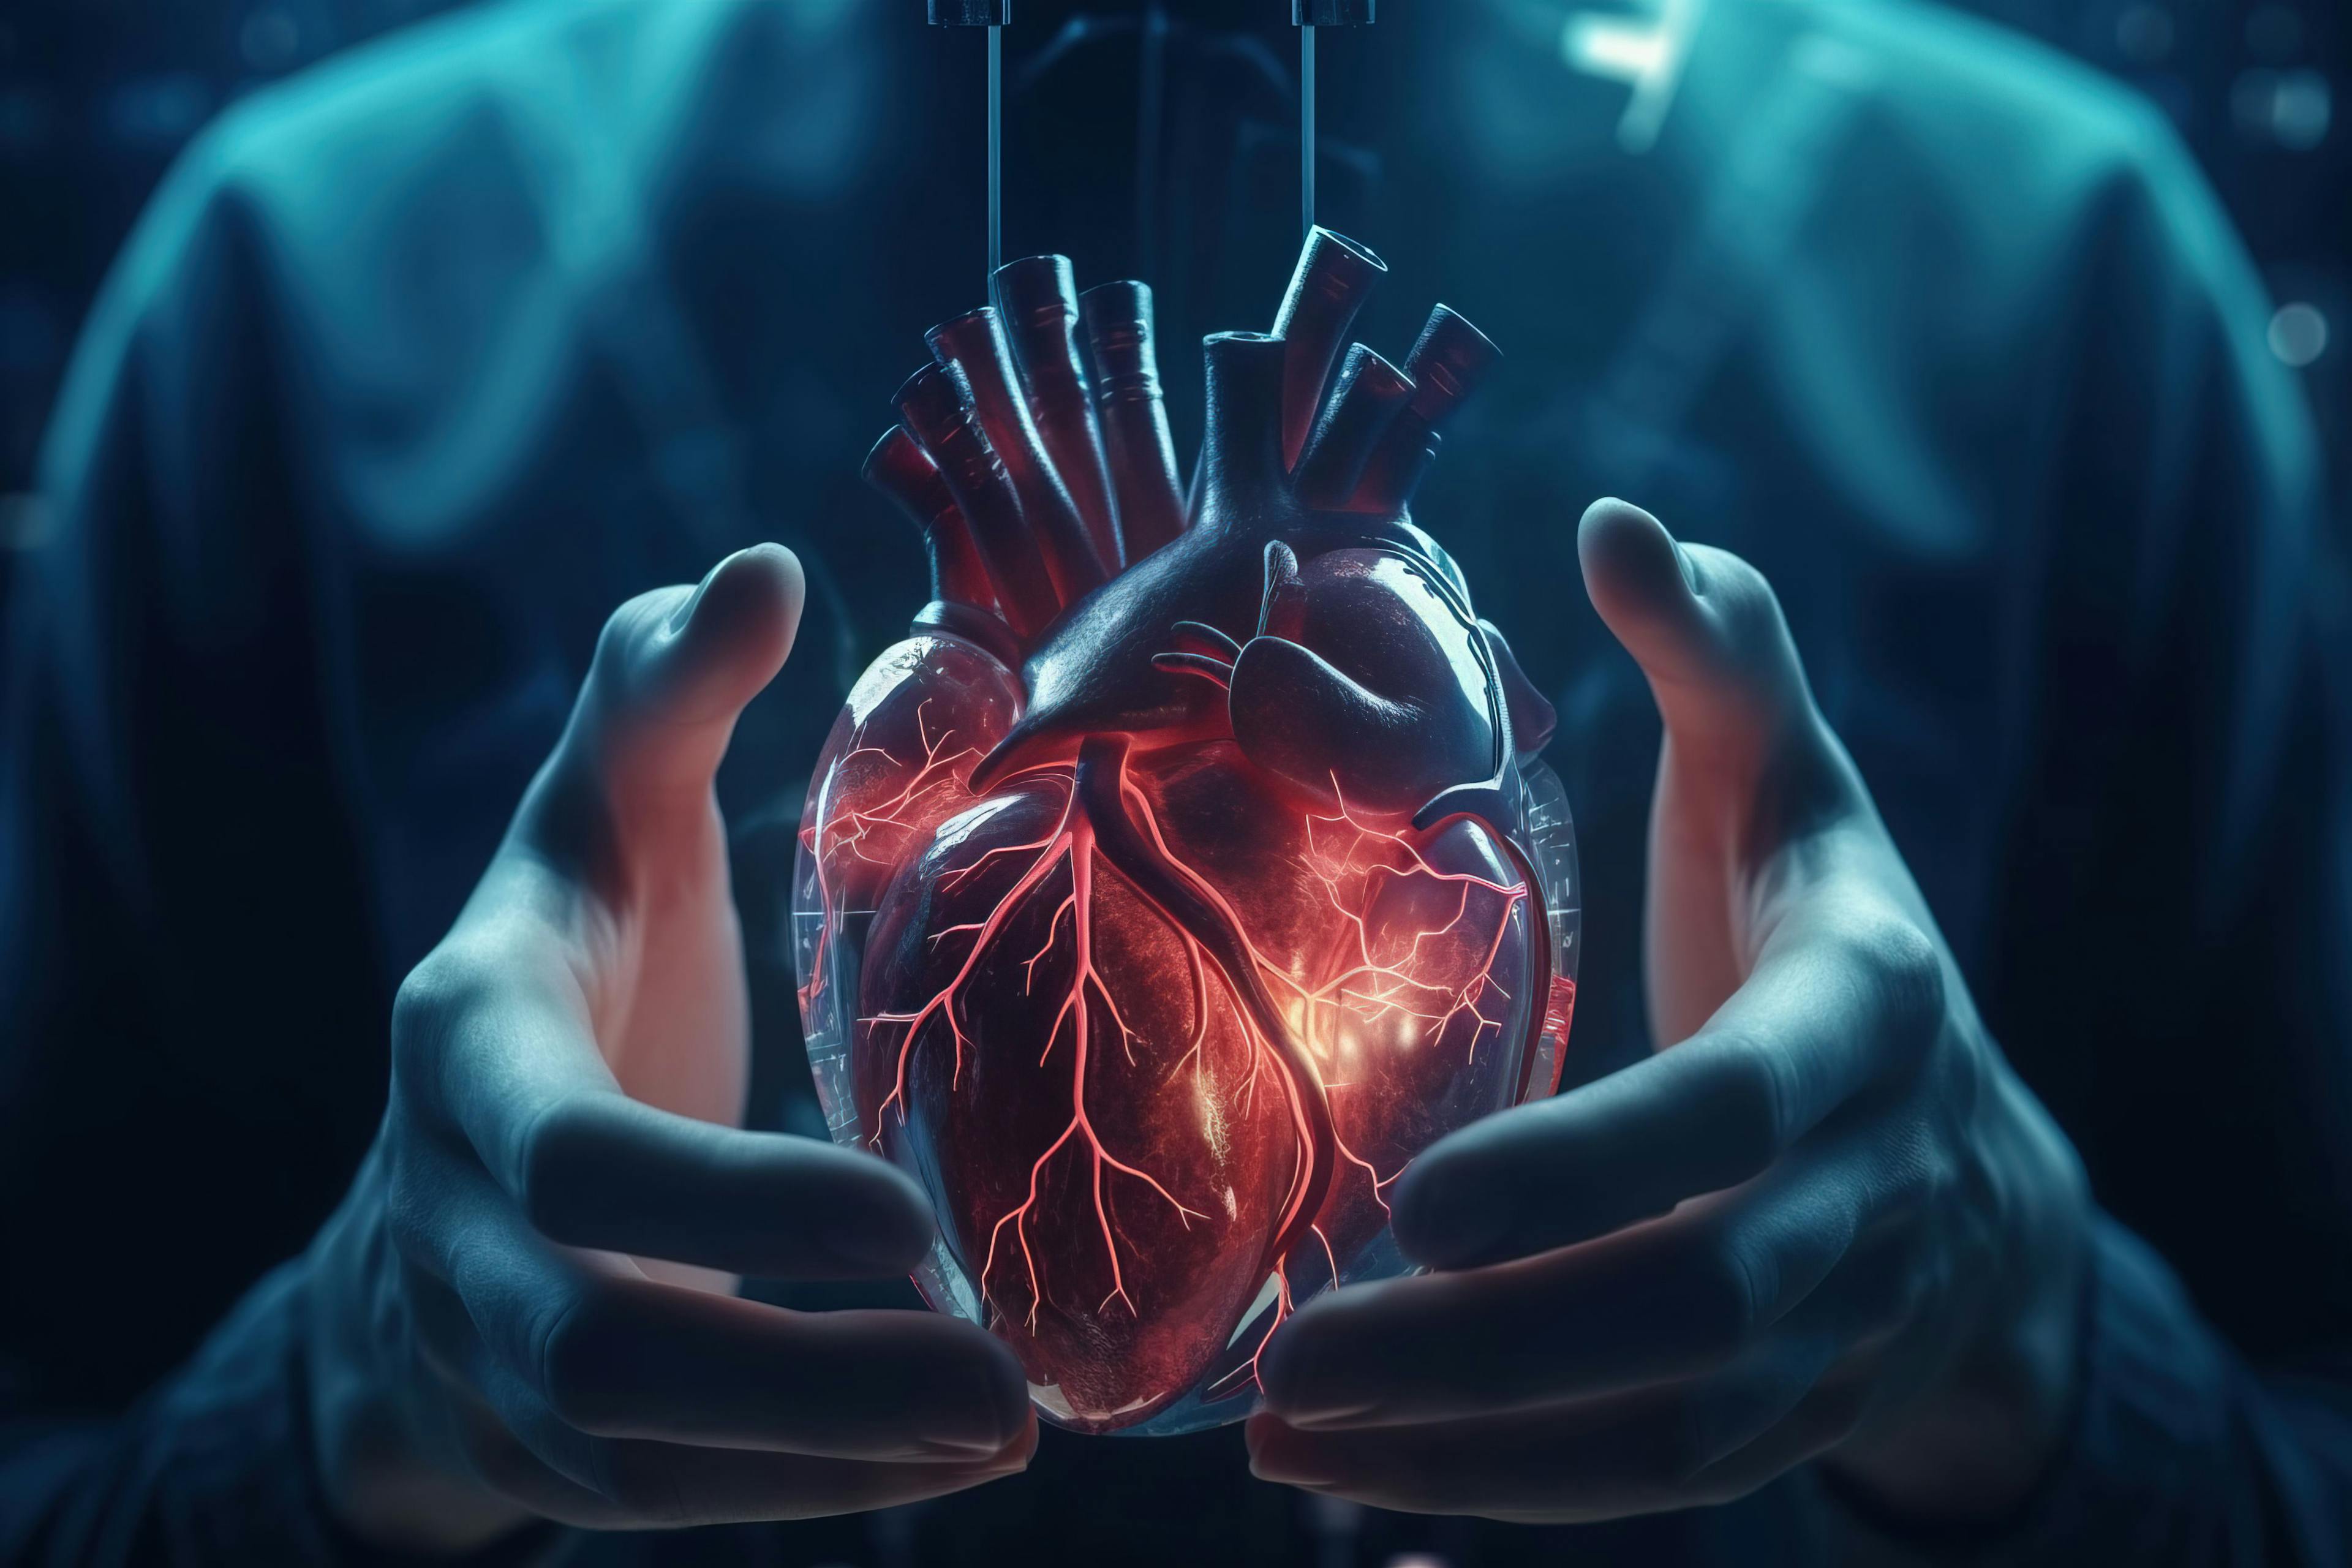 glowing human heart in hands | Image credit: IBEX.Media – stock.adobe.com